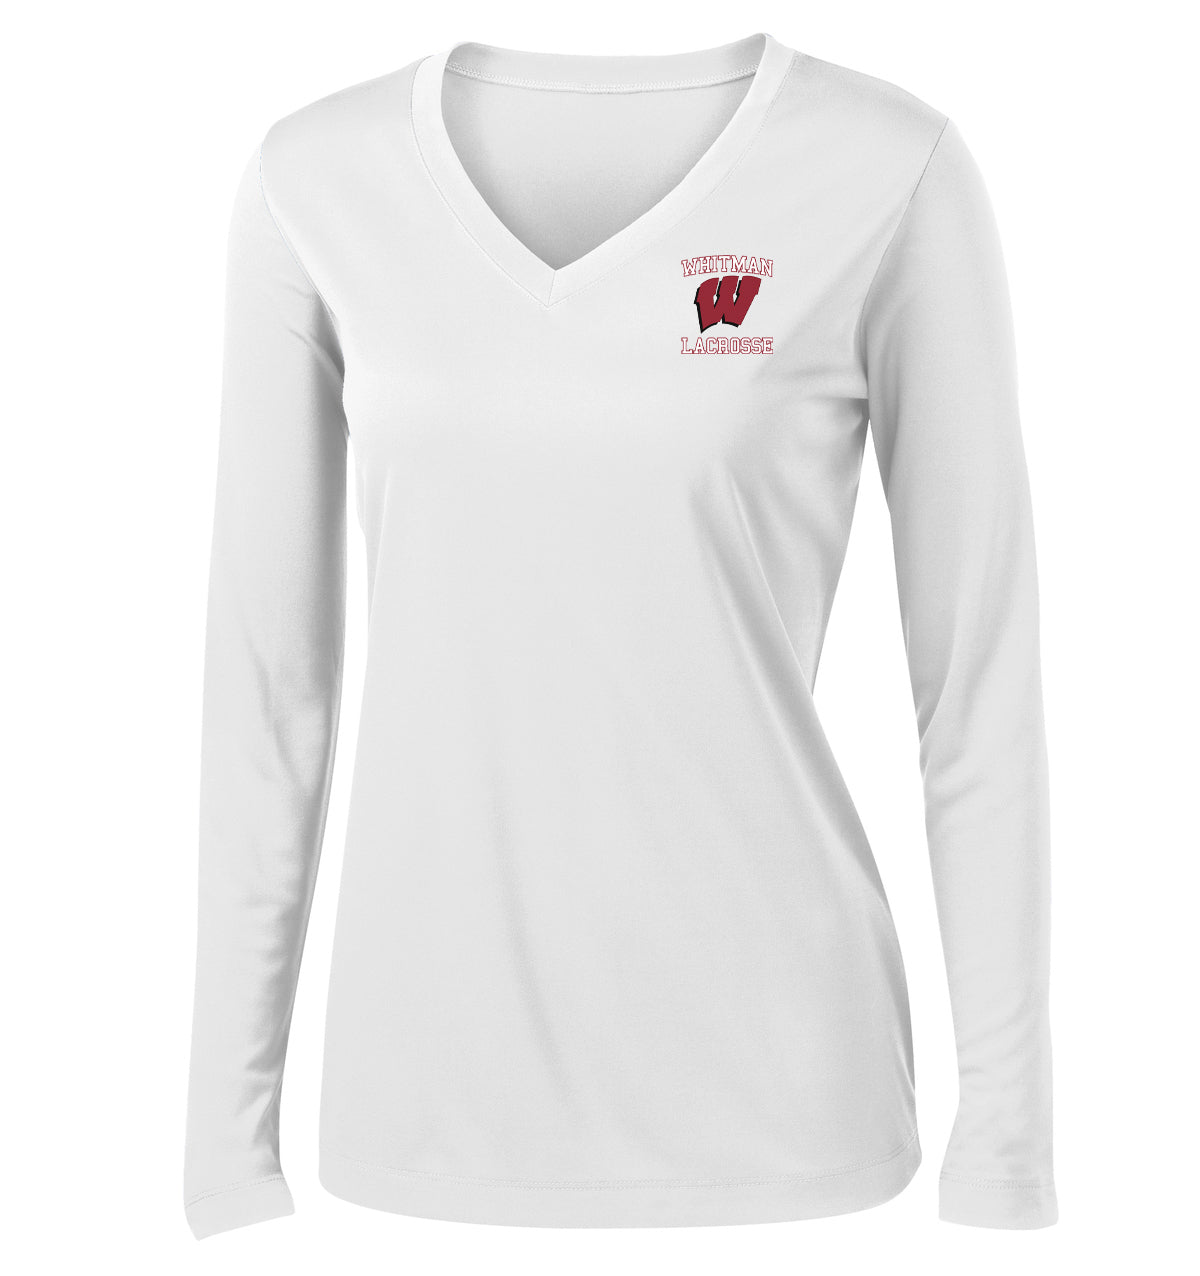 Whitman Lacrosse Women's Long Sleeve Performance Shirt